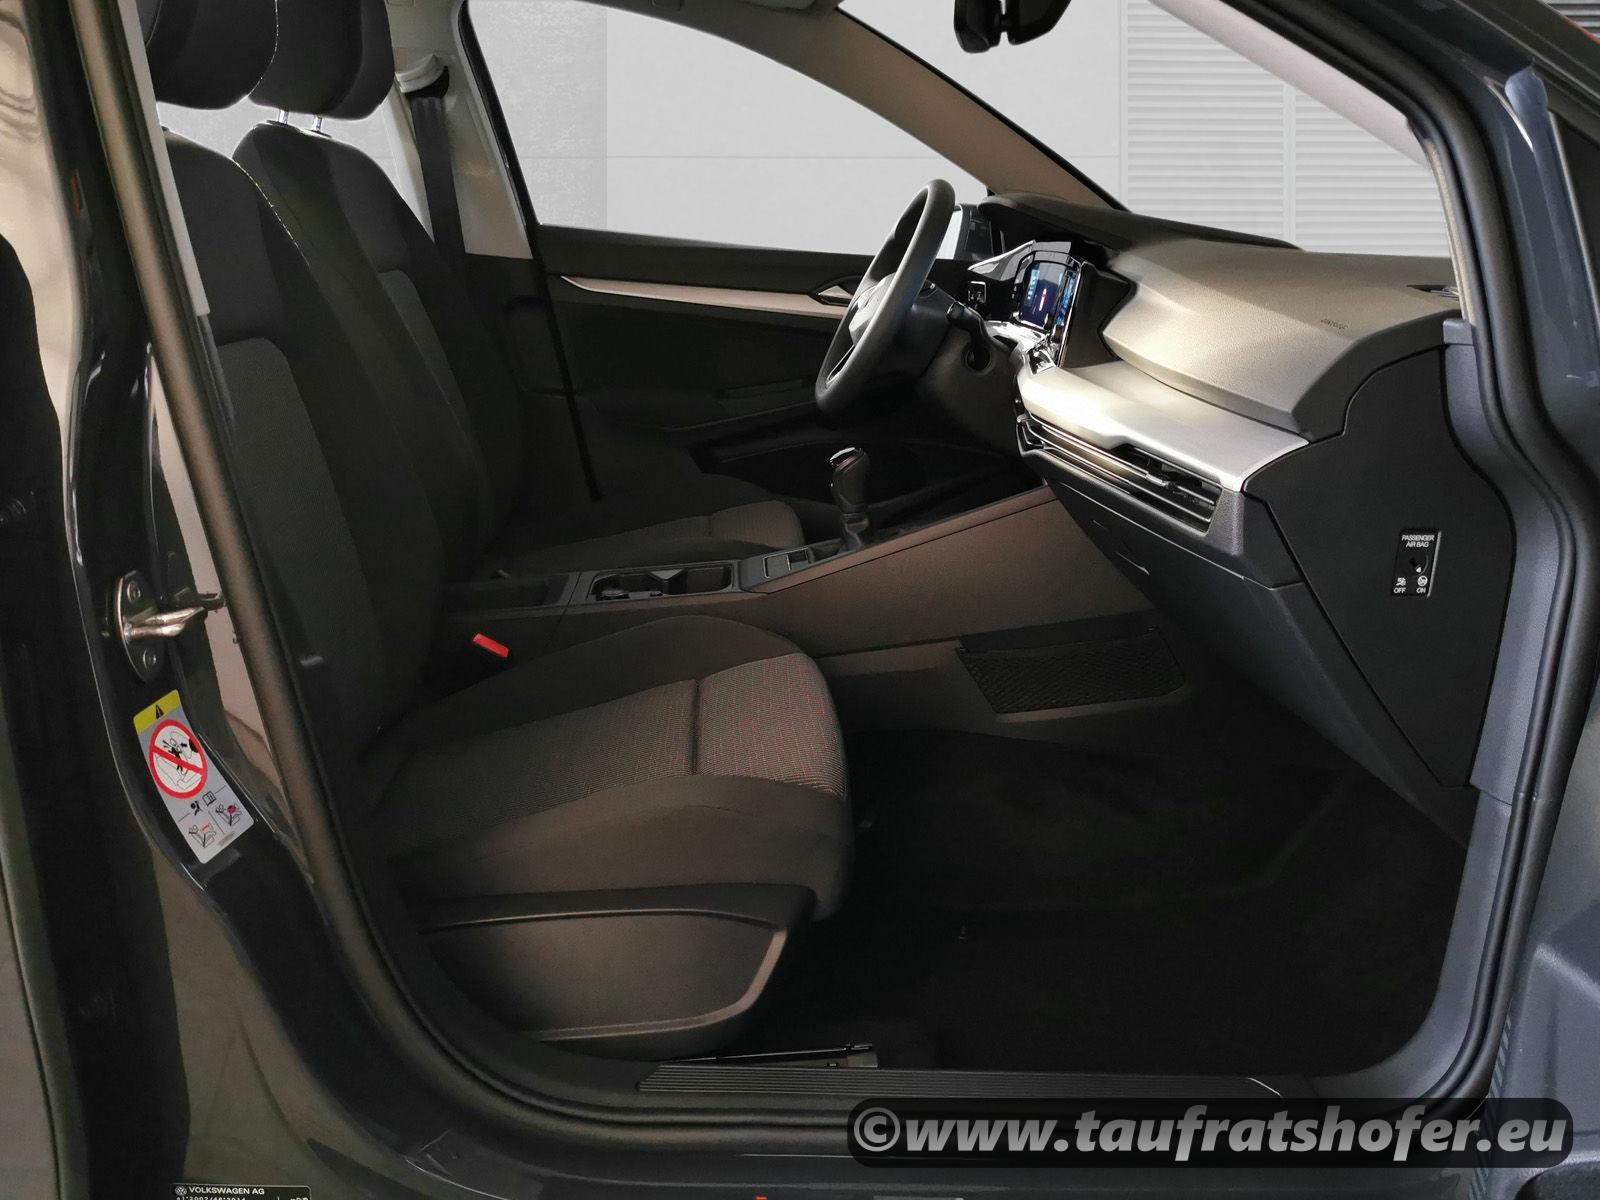 Volkswagen Golf STYLE 1.5 TSI 130 PS, LED Plus Scheinwerfer, ergoActive  Sitze, Stauassistent, Parksensoren, AppConnect, Alufelgen